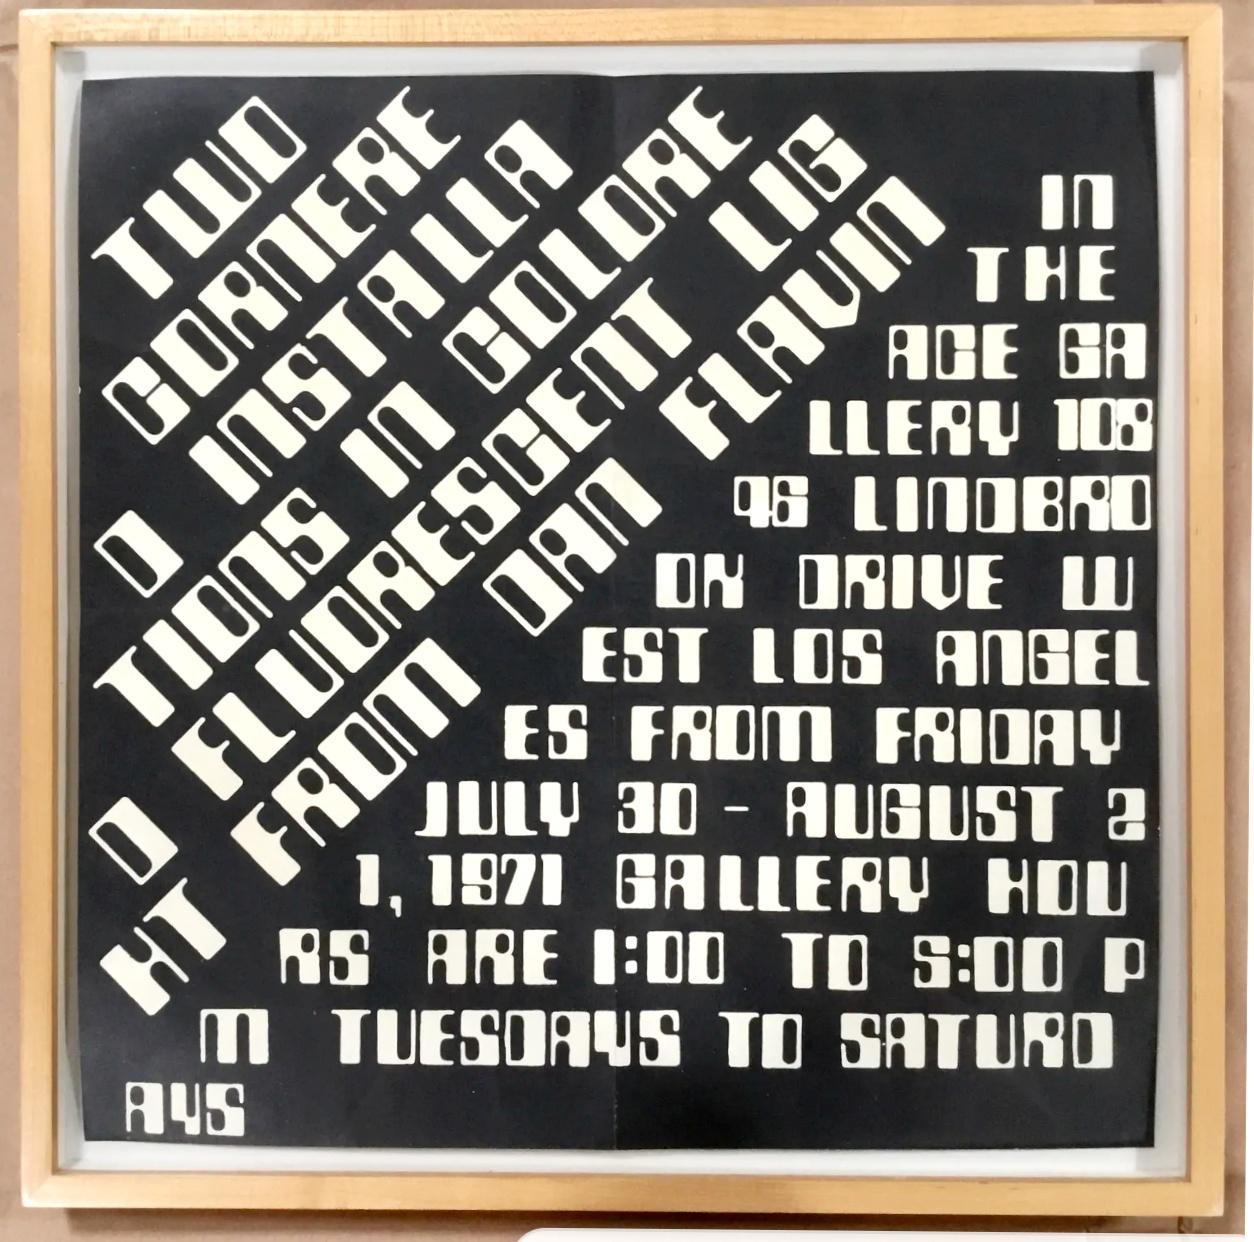 Dan Flavin Abstract Print - Historic invitation poster for 1970 ACE Gallery exhibition Minimalist light art